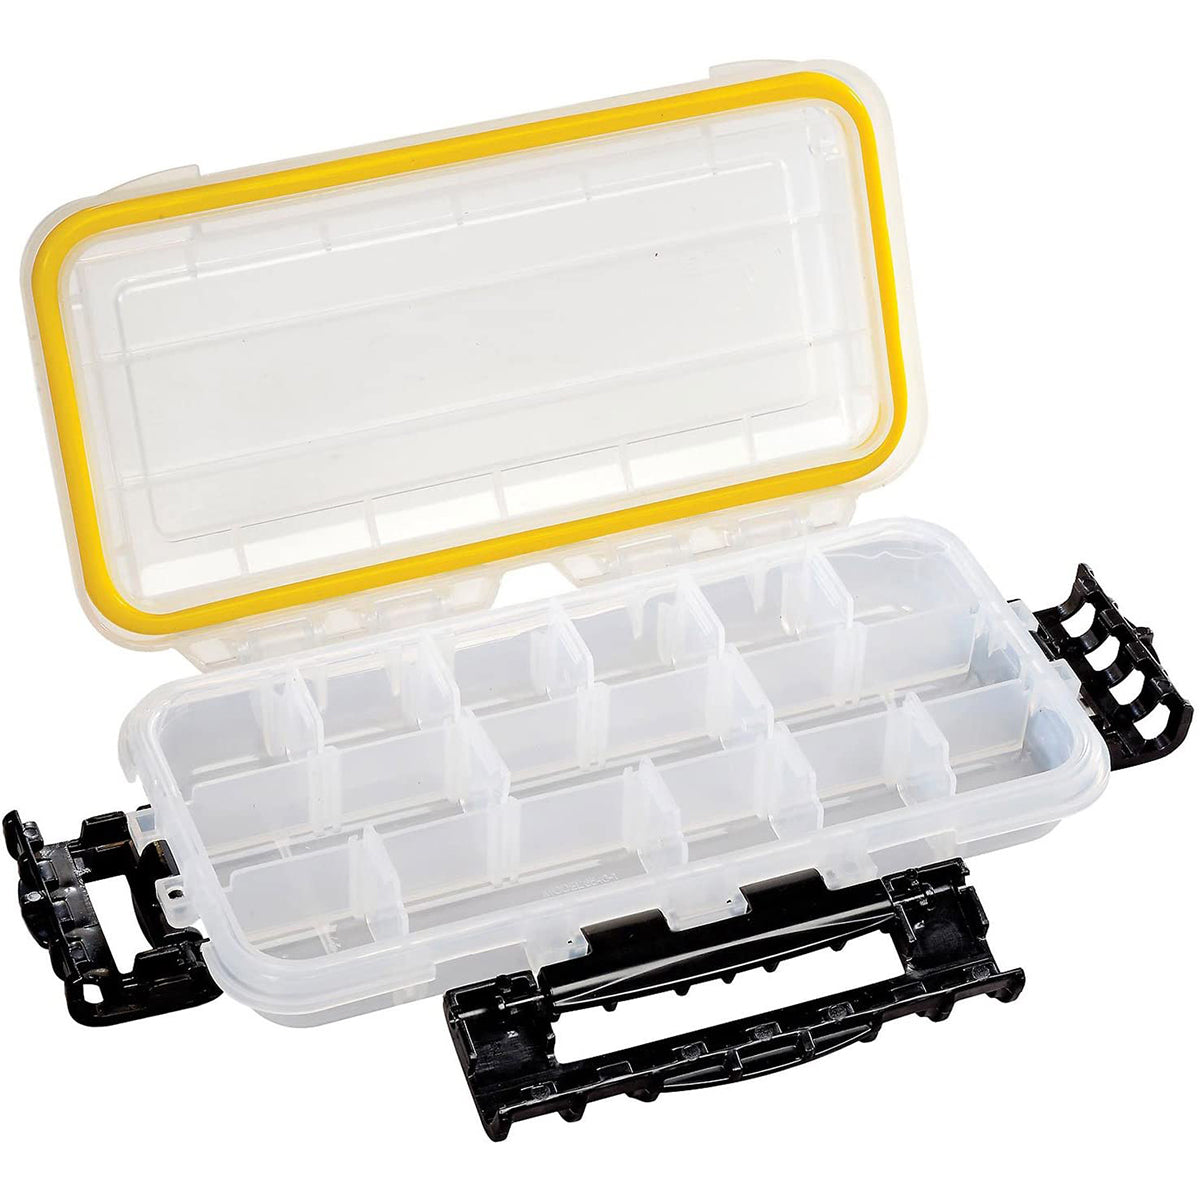 Plano 3640 Waterproof Tackle Storage Tray